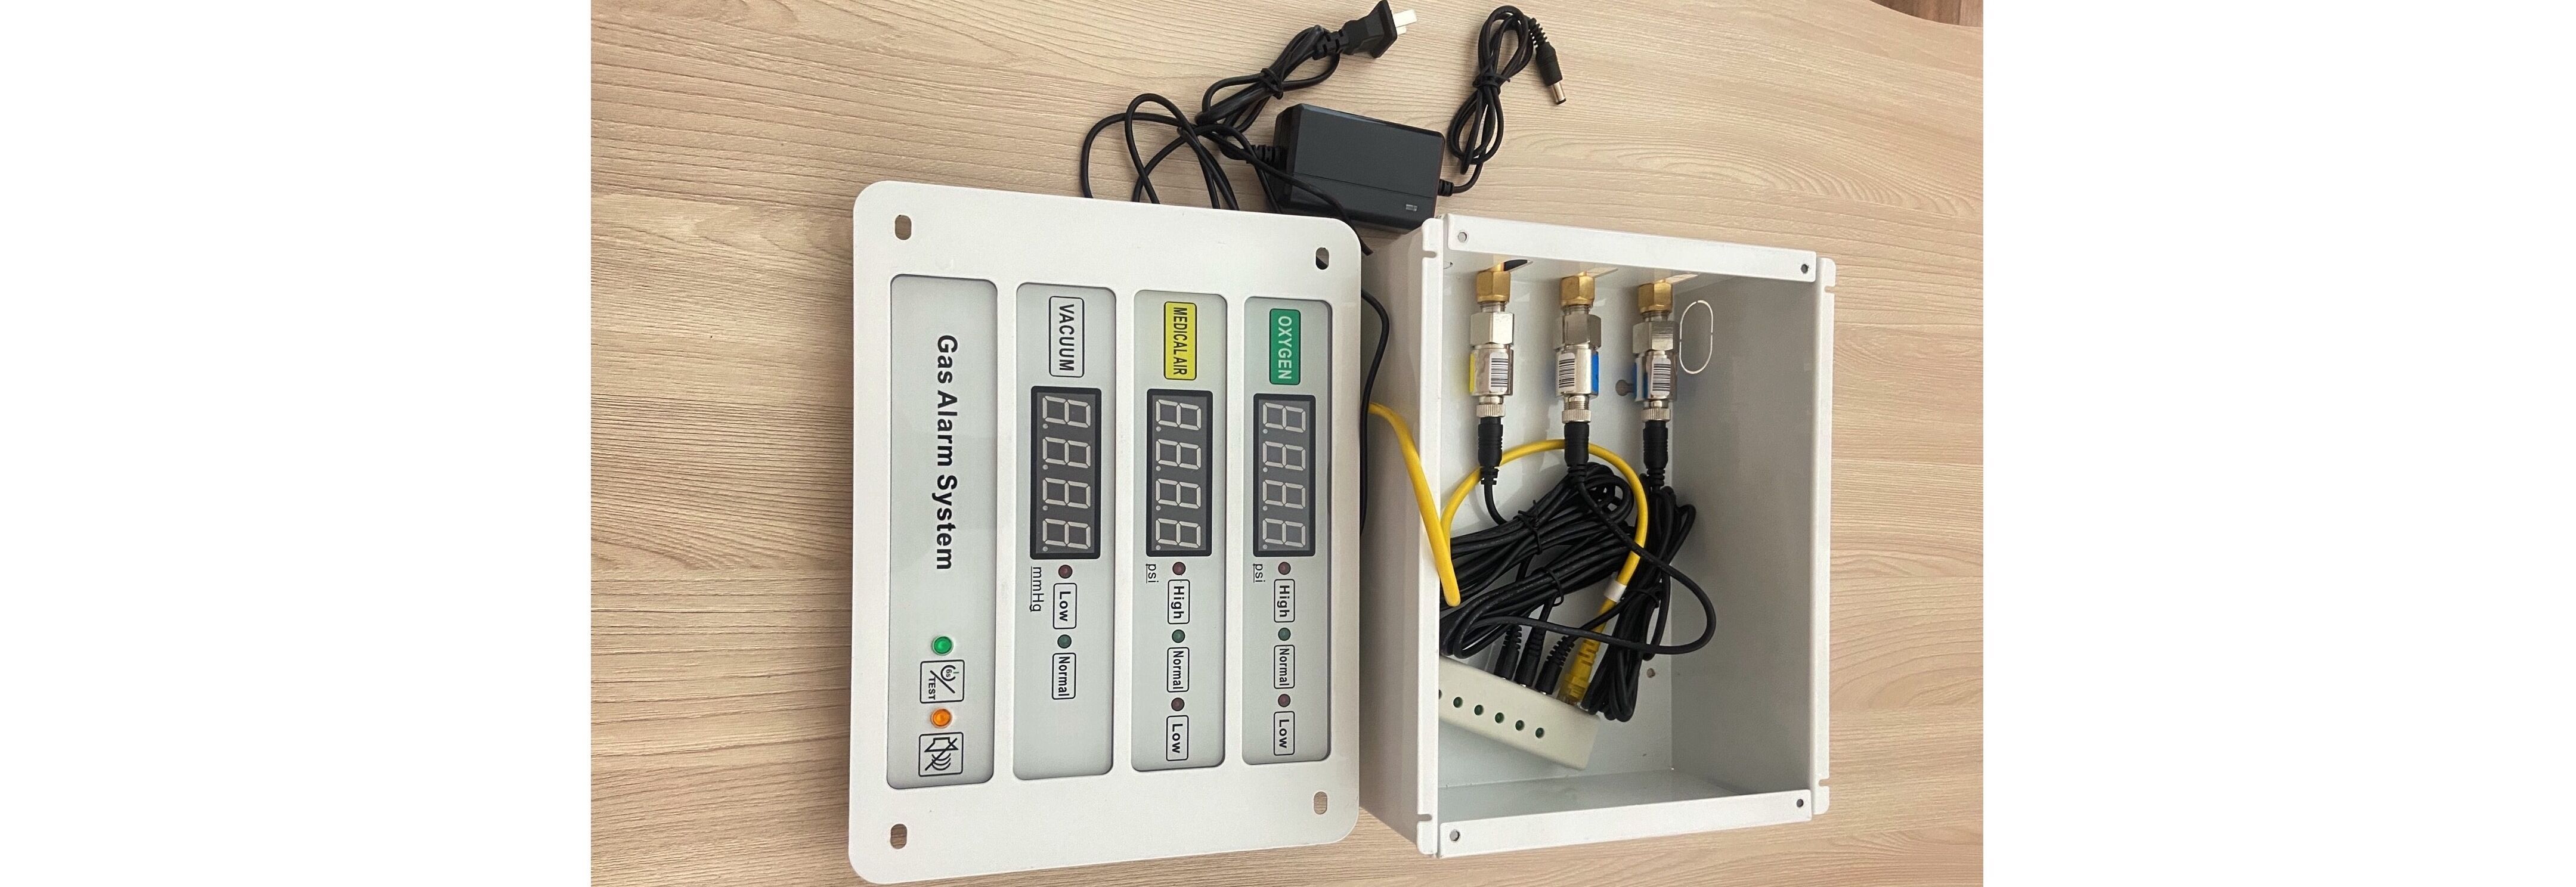 Oxygen Air & Vac Digital Hospital Gas Alarm System Unit_เครื่องเตือนแรงดันการจ่ายก๊าซทางการแพทย์แบบ 